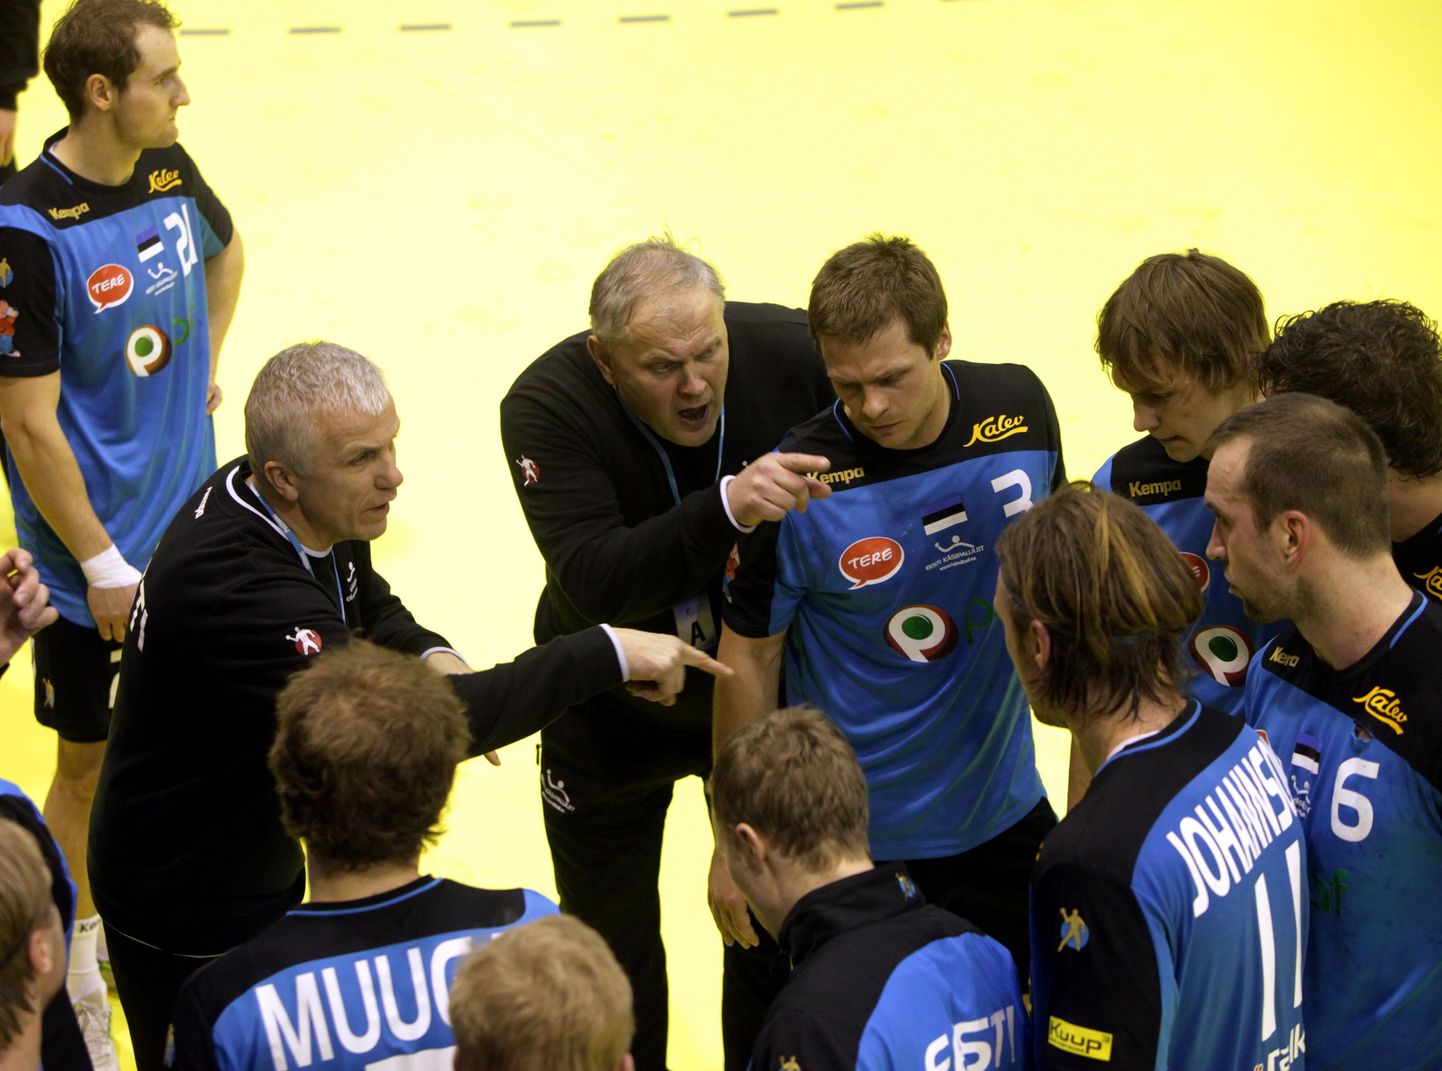 Eesti meeste käsipallikoondis